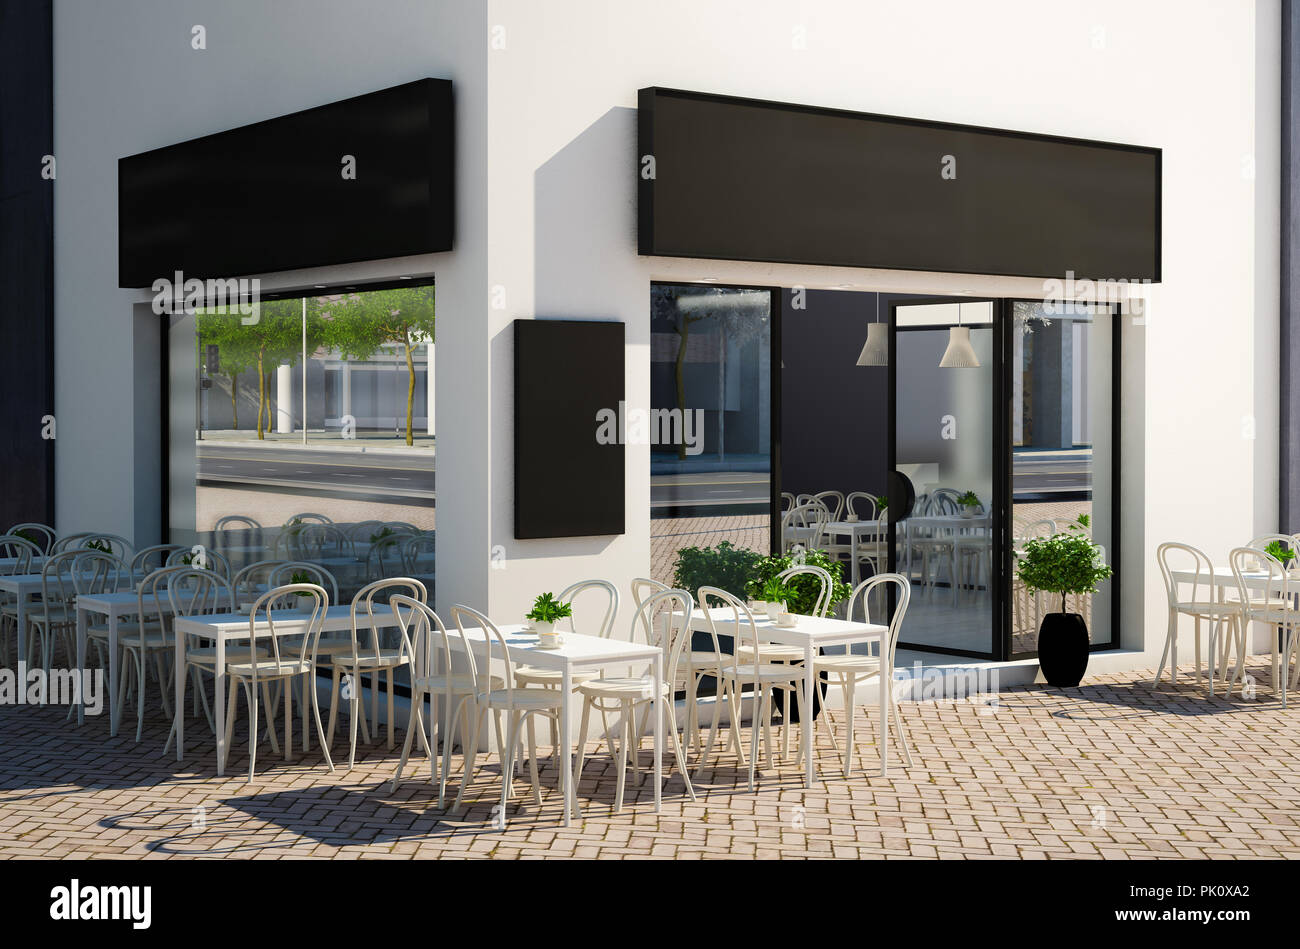 https://c8.alamy.com/comp/PK0XA2/3d-rendering-of-modern-cafe-store-exterior-with-terrace-PK0XA2.jpg